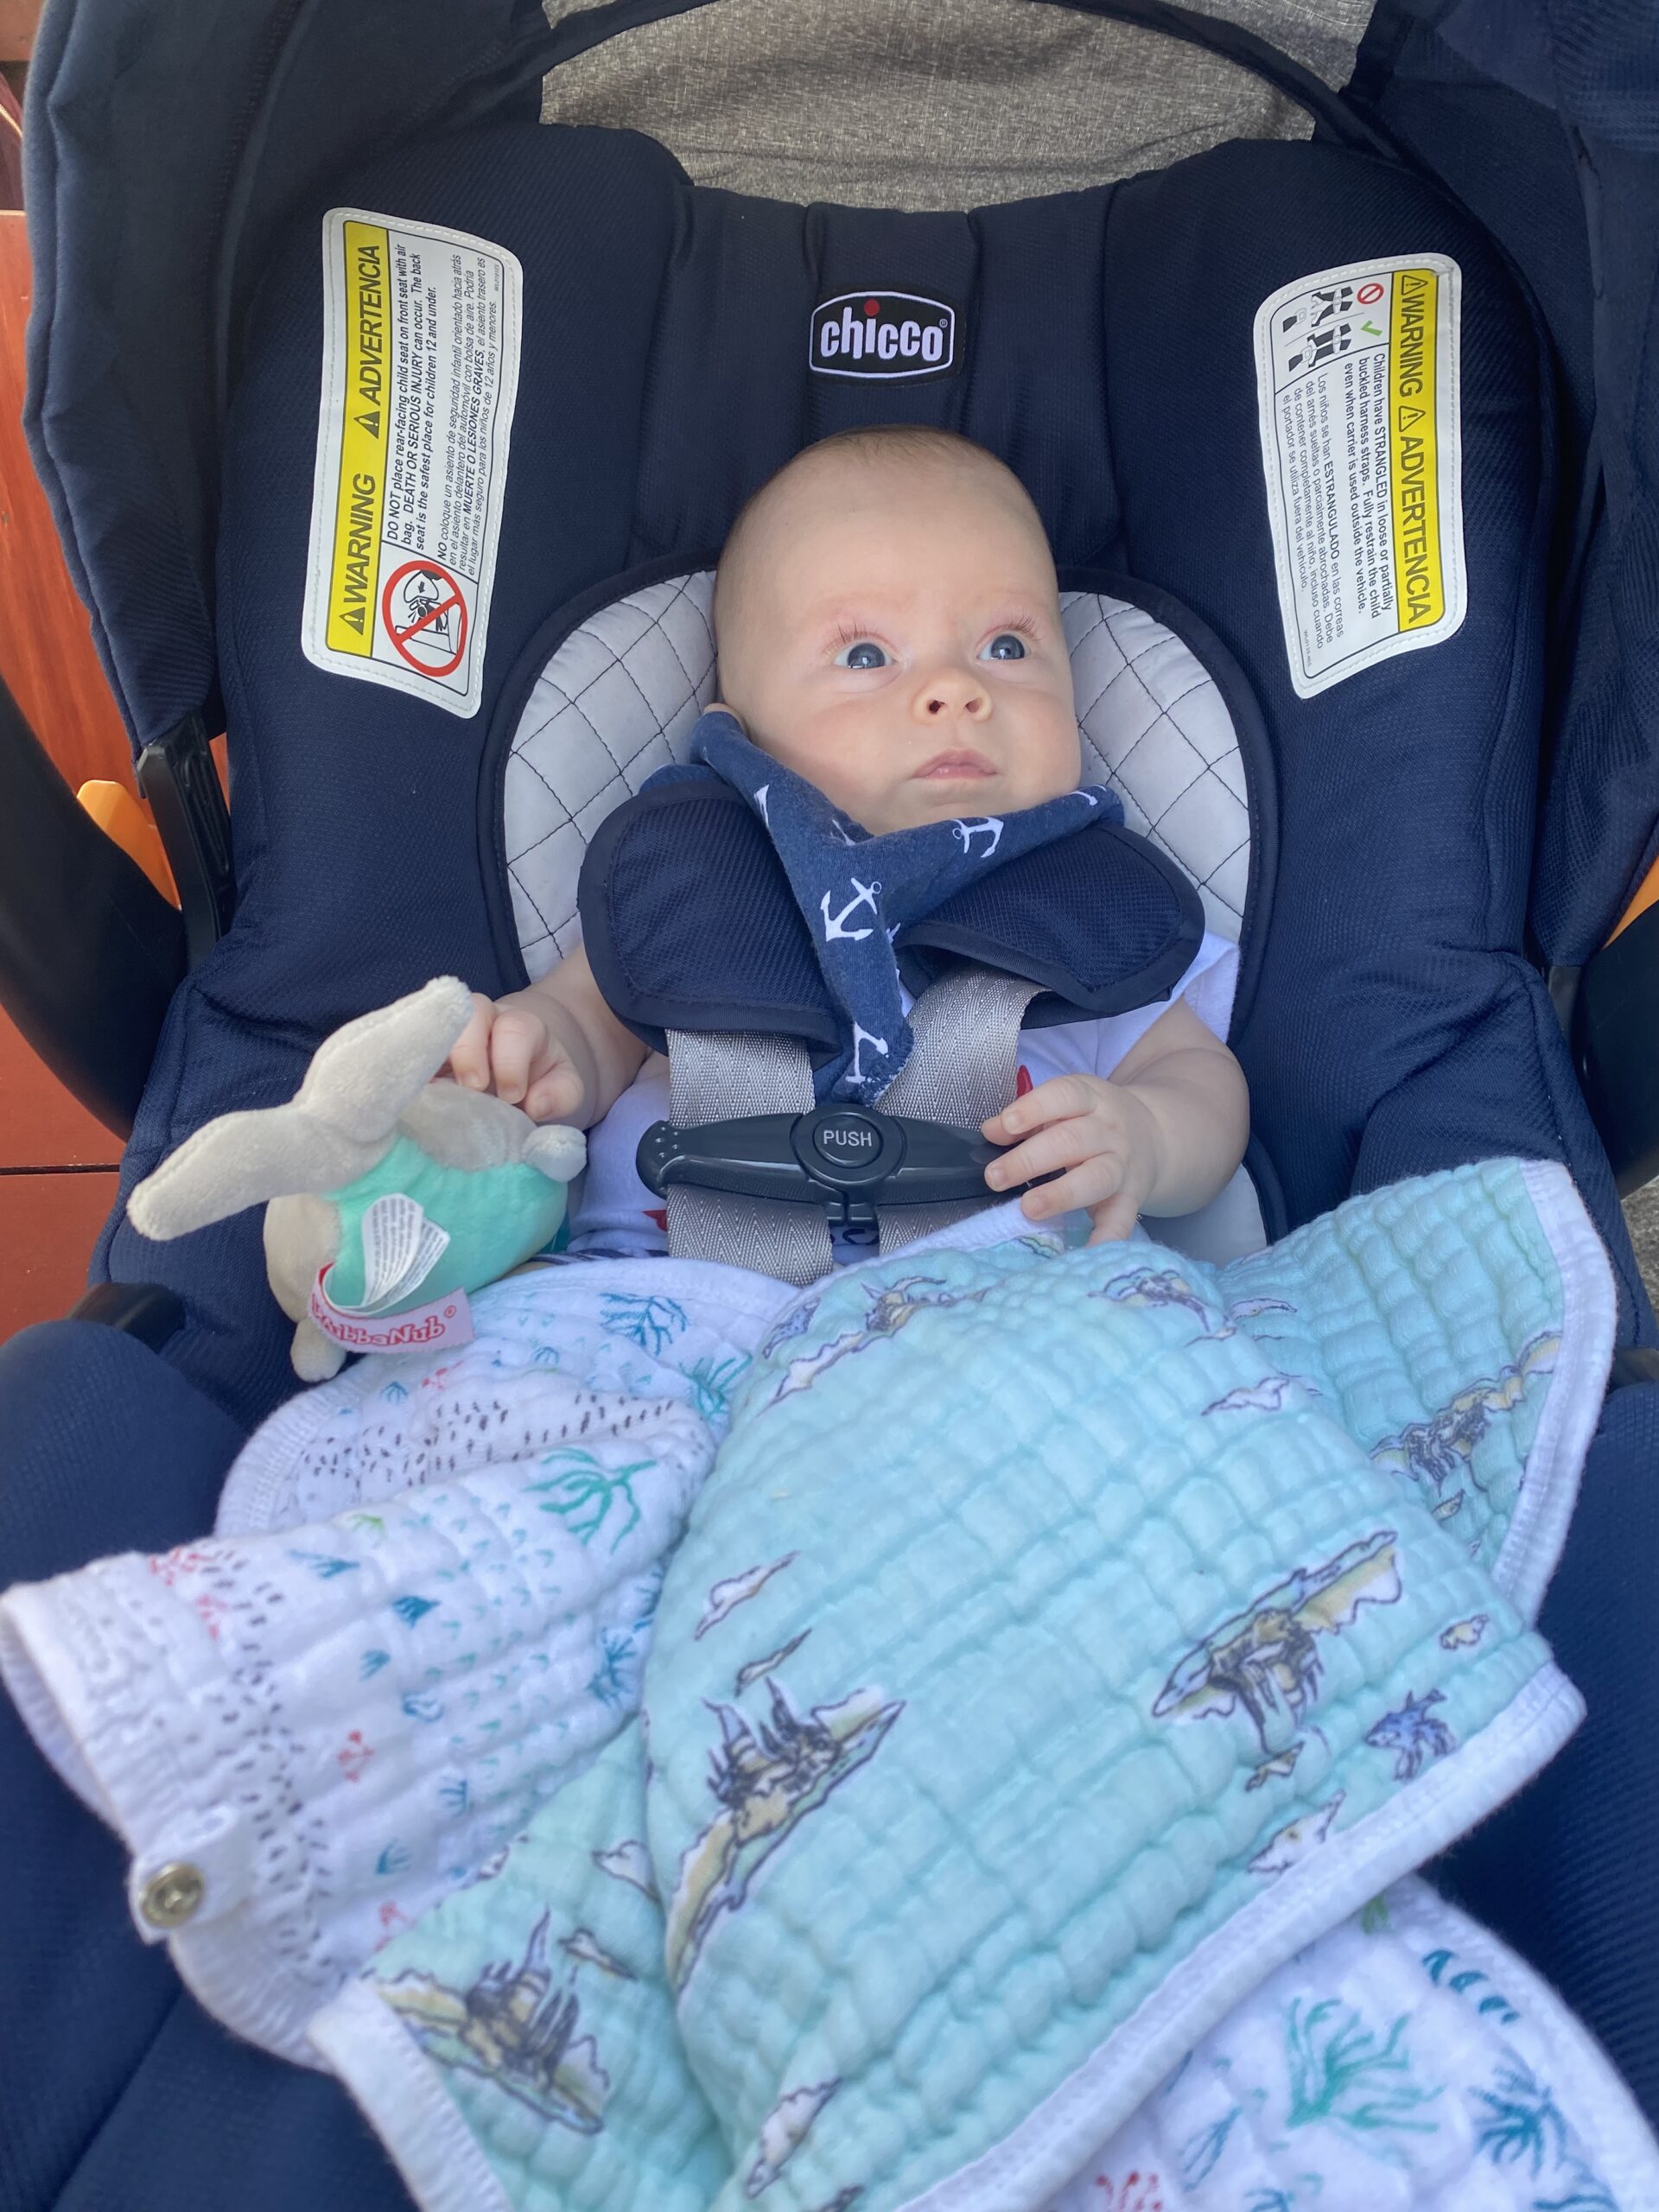 Road Trip with a Newborn